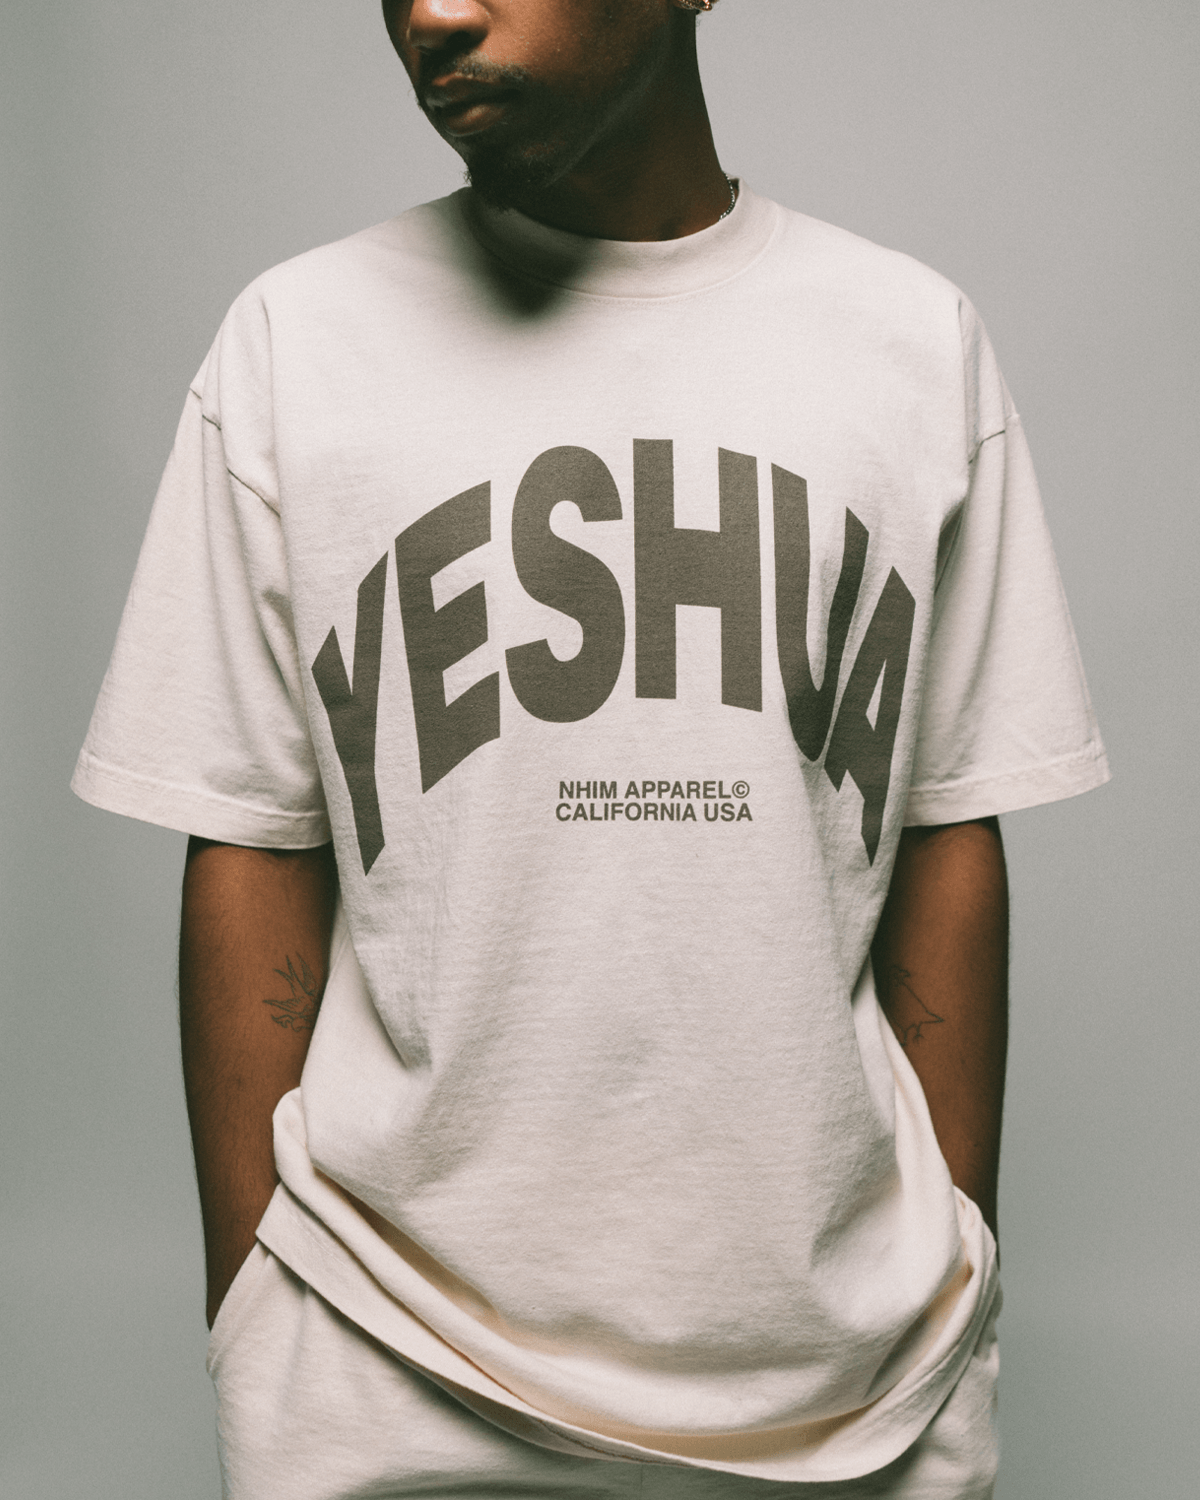 Yeshua shirt YESHUA cream t-shirt made by NHIM APPAREL christian clothing brand